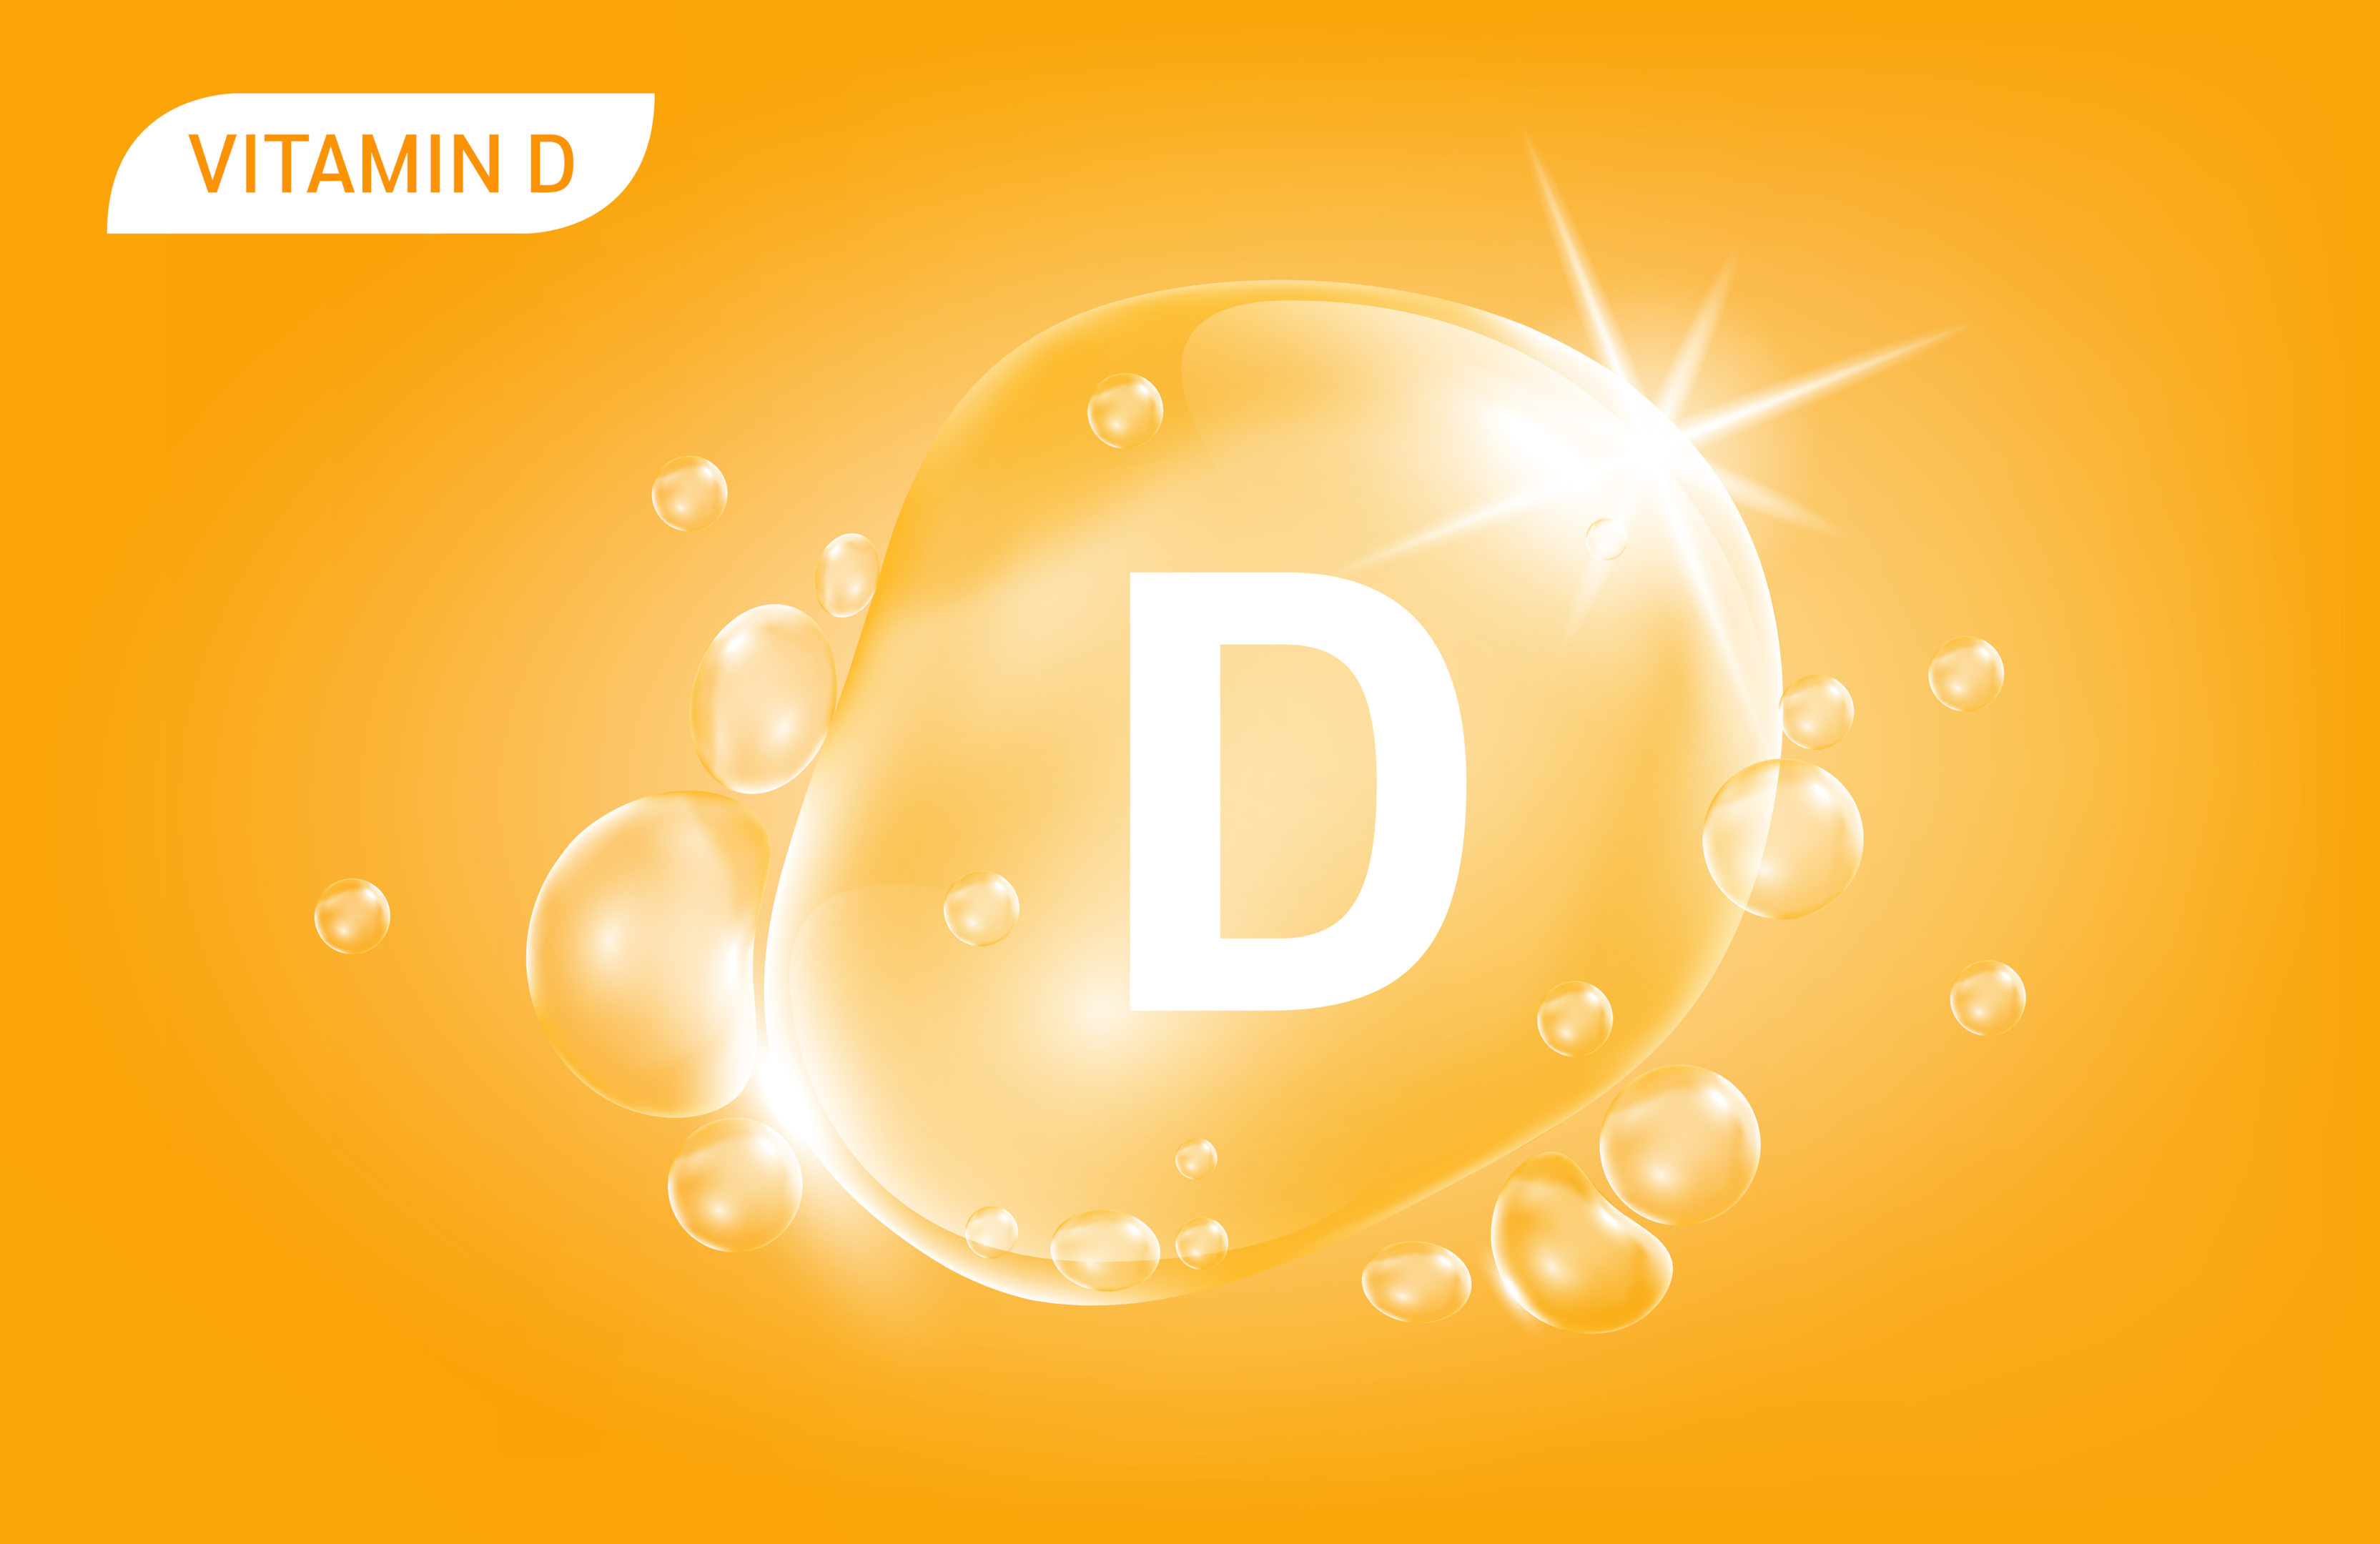 Sun is the ultimate treasure of vitamin D.